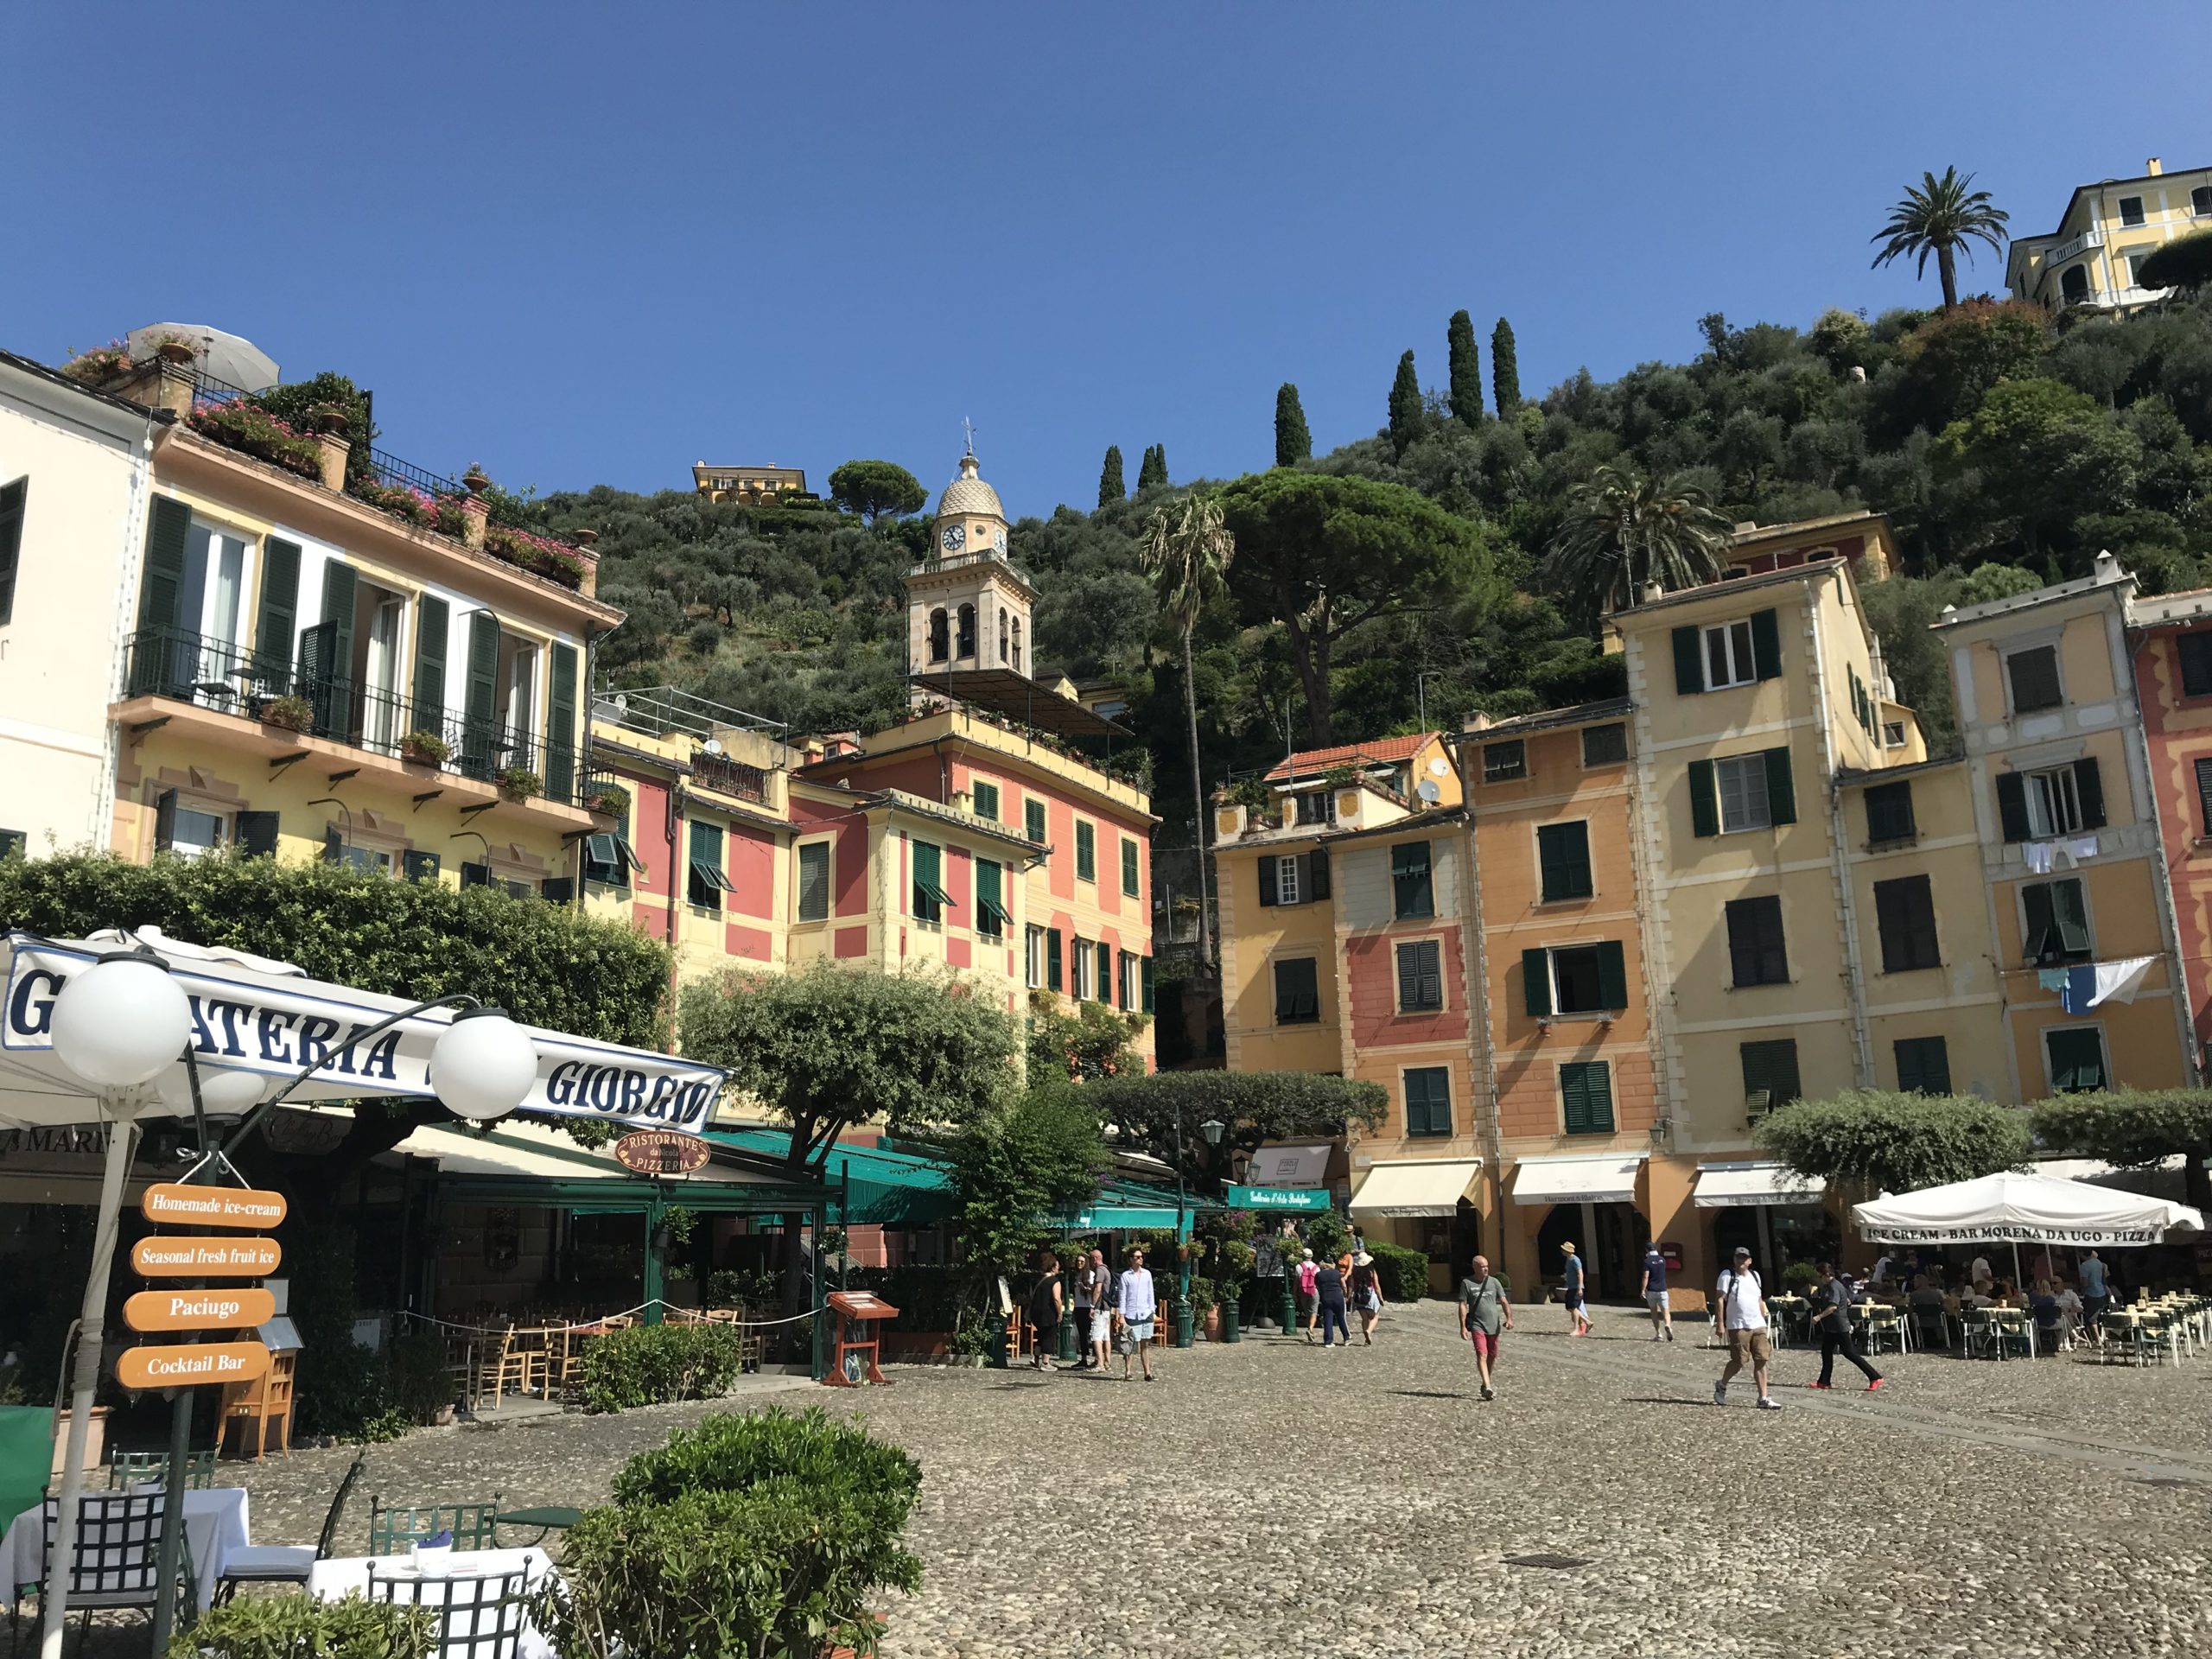 Itália tenta retomar normalidade mas falta de turistas preocupa